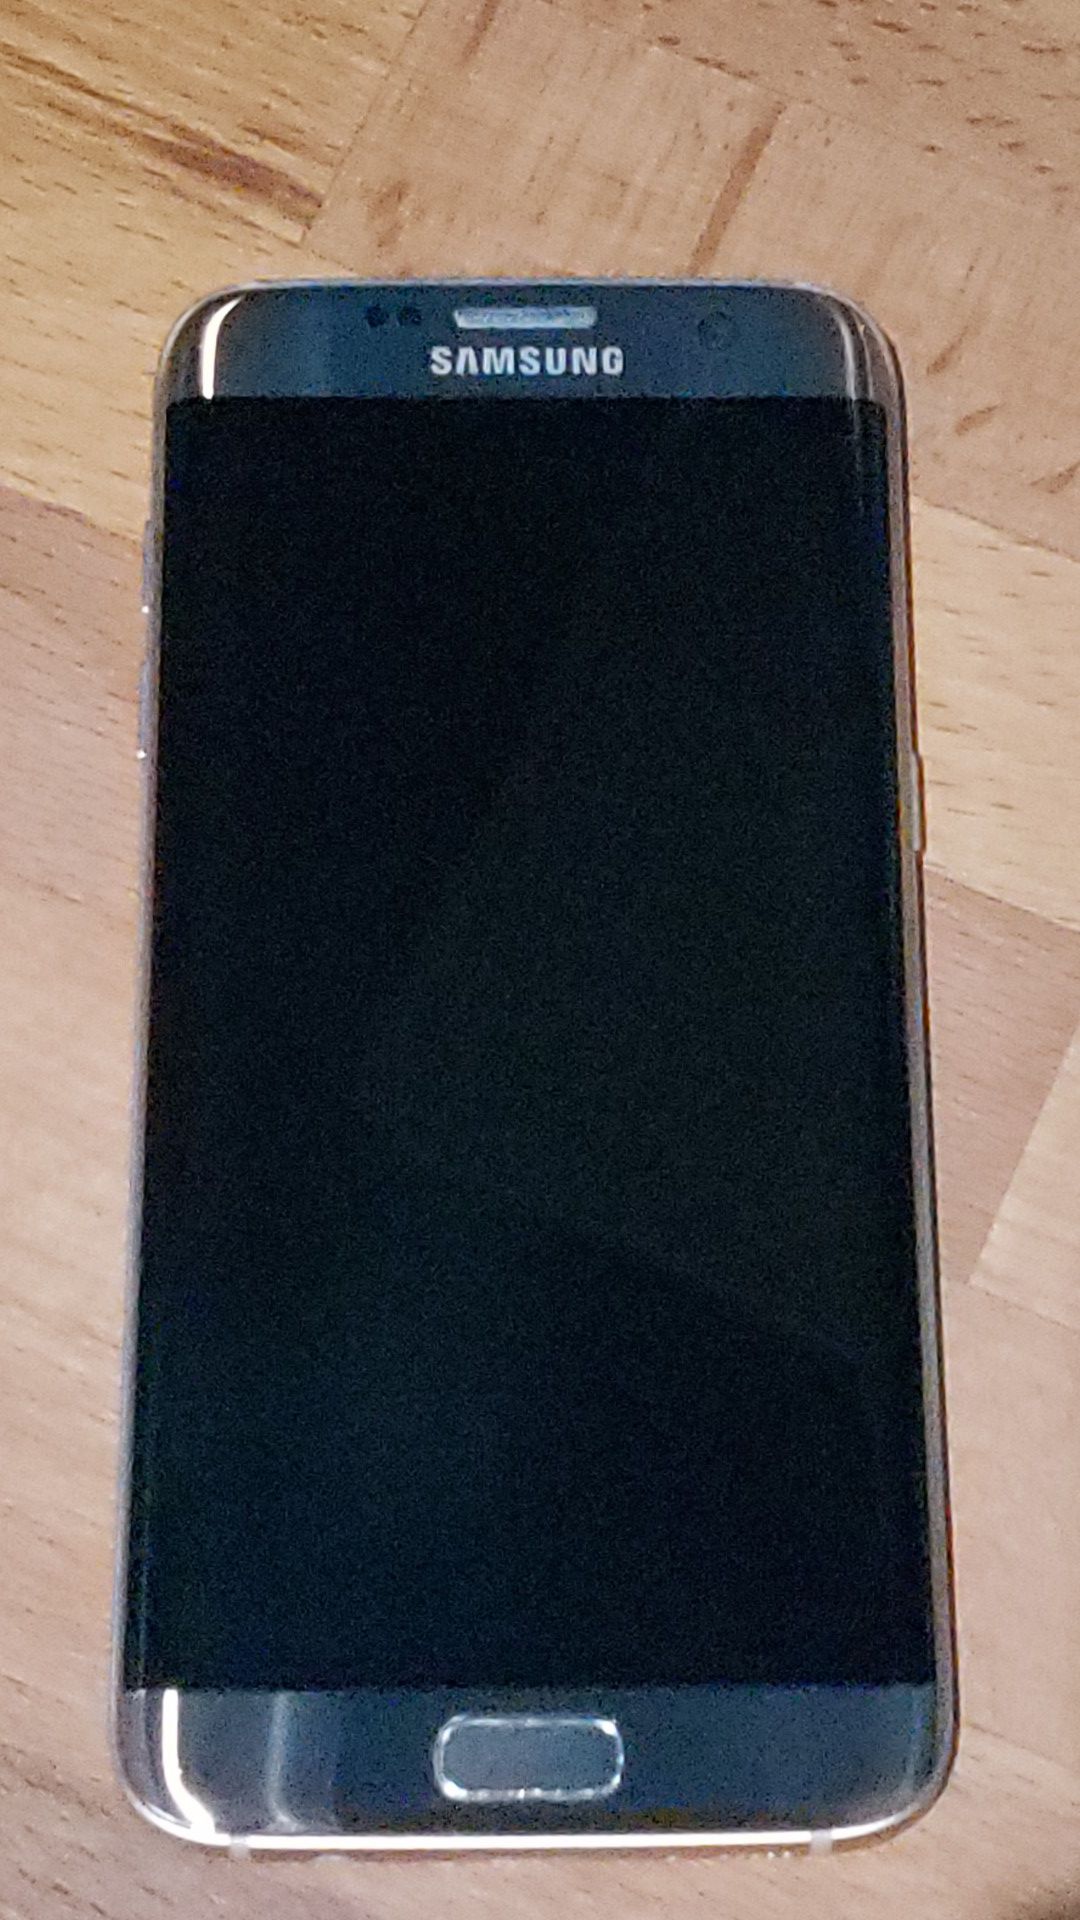 Samsung Galaxy s7 edge w/ phone case.